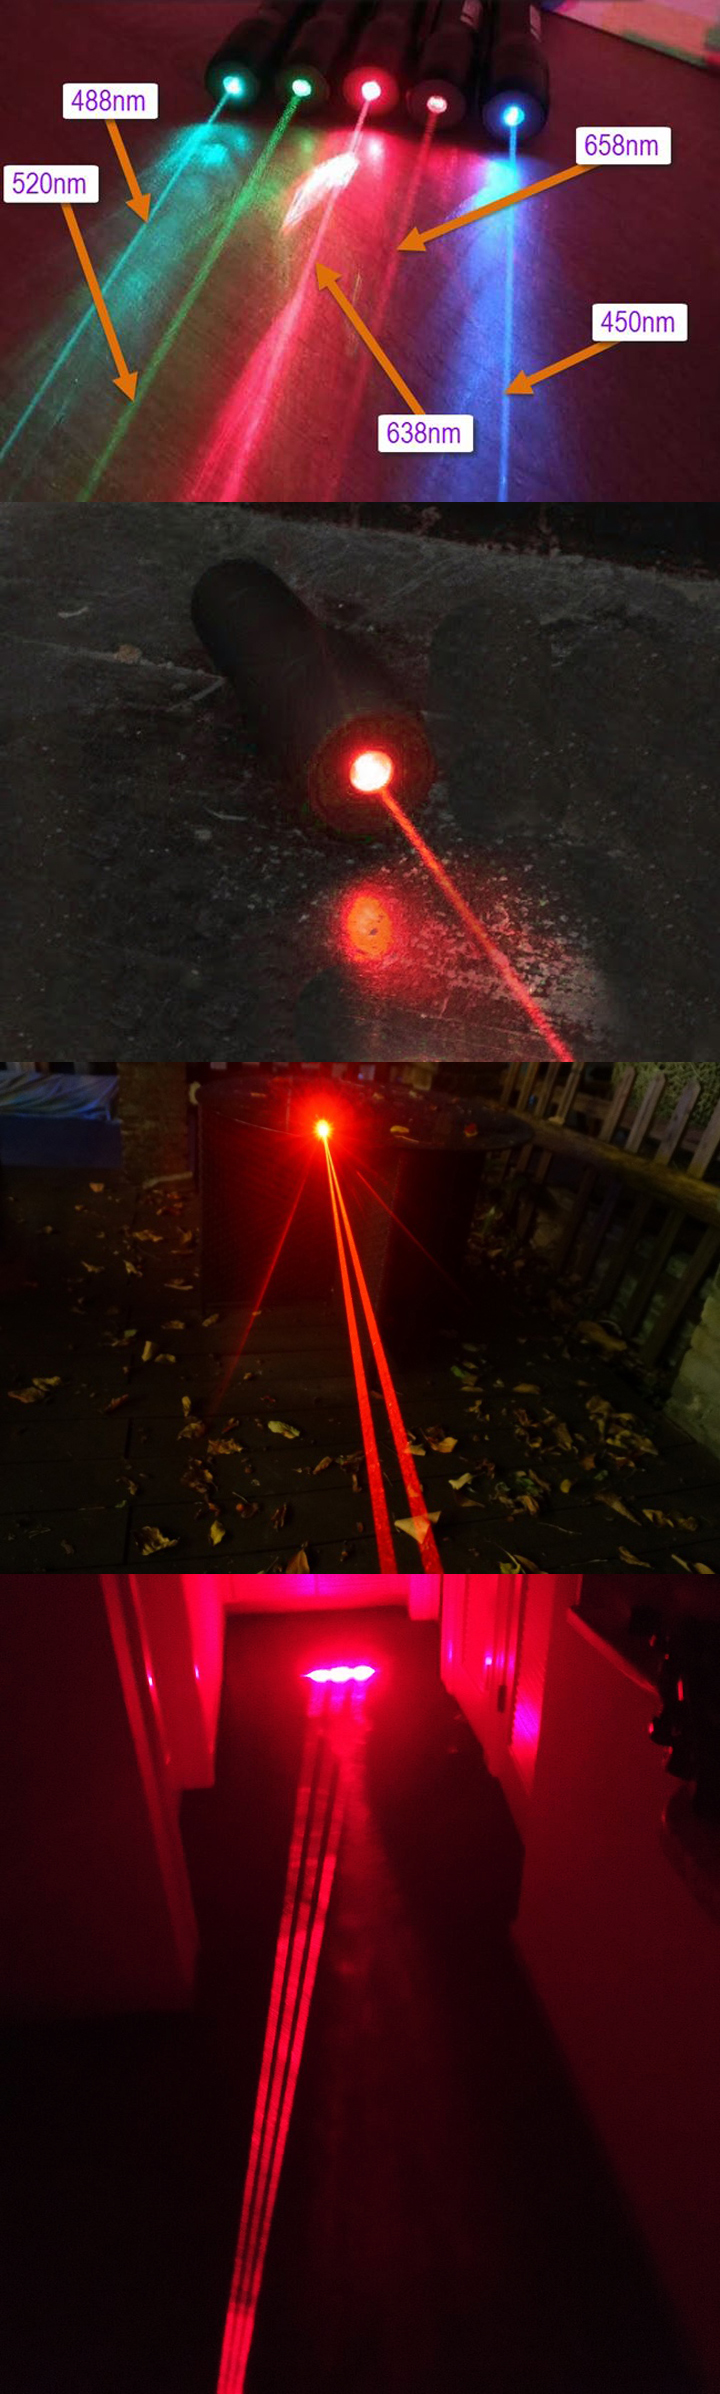 laser rosso 638nm